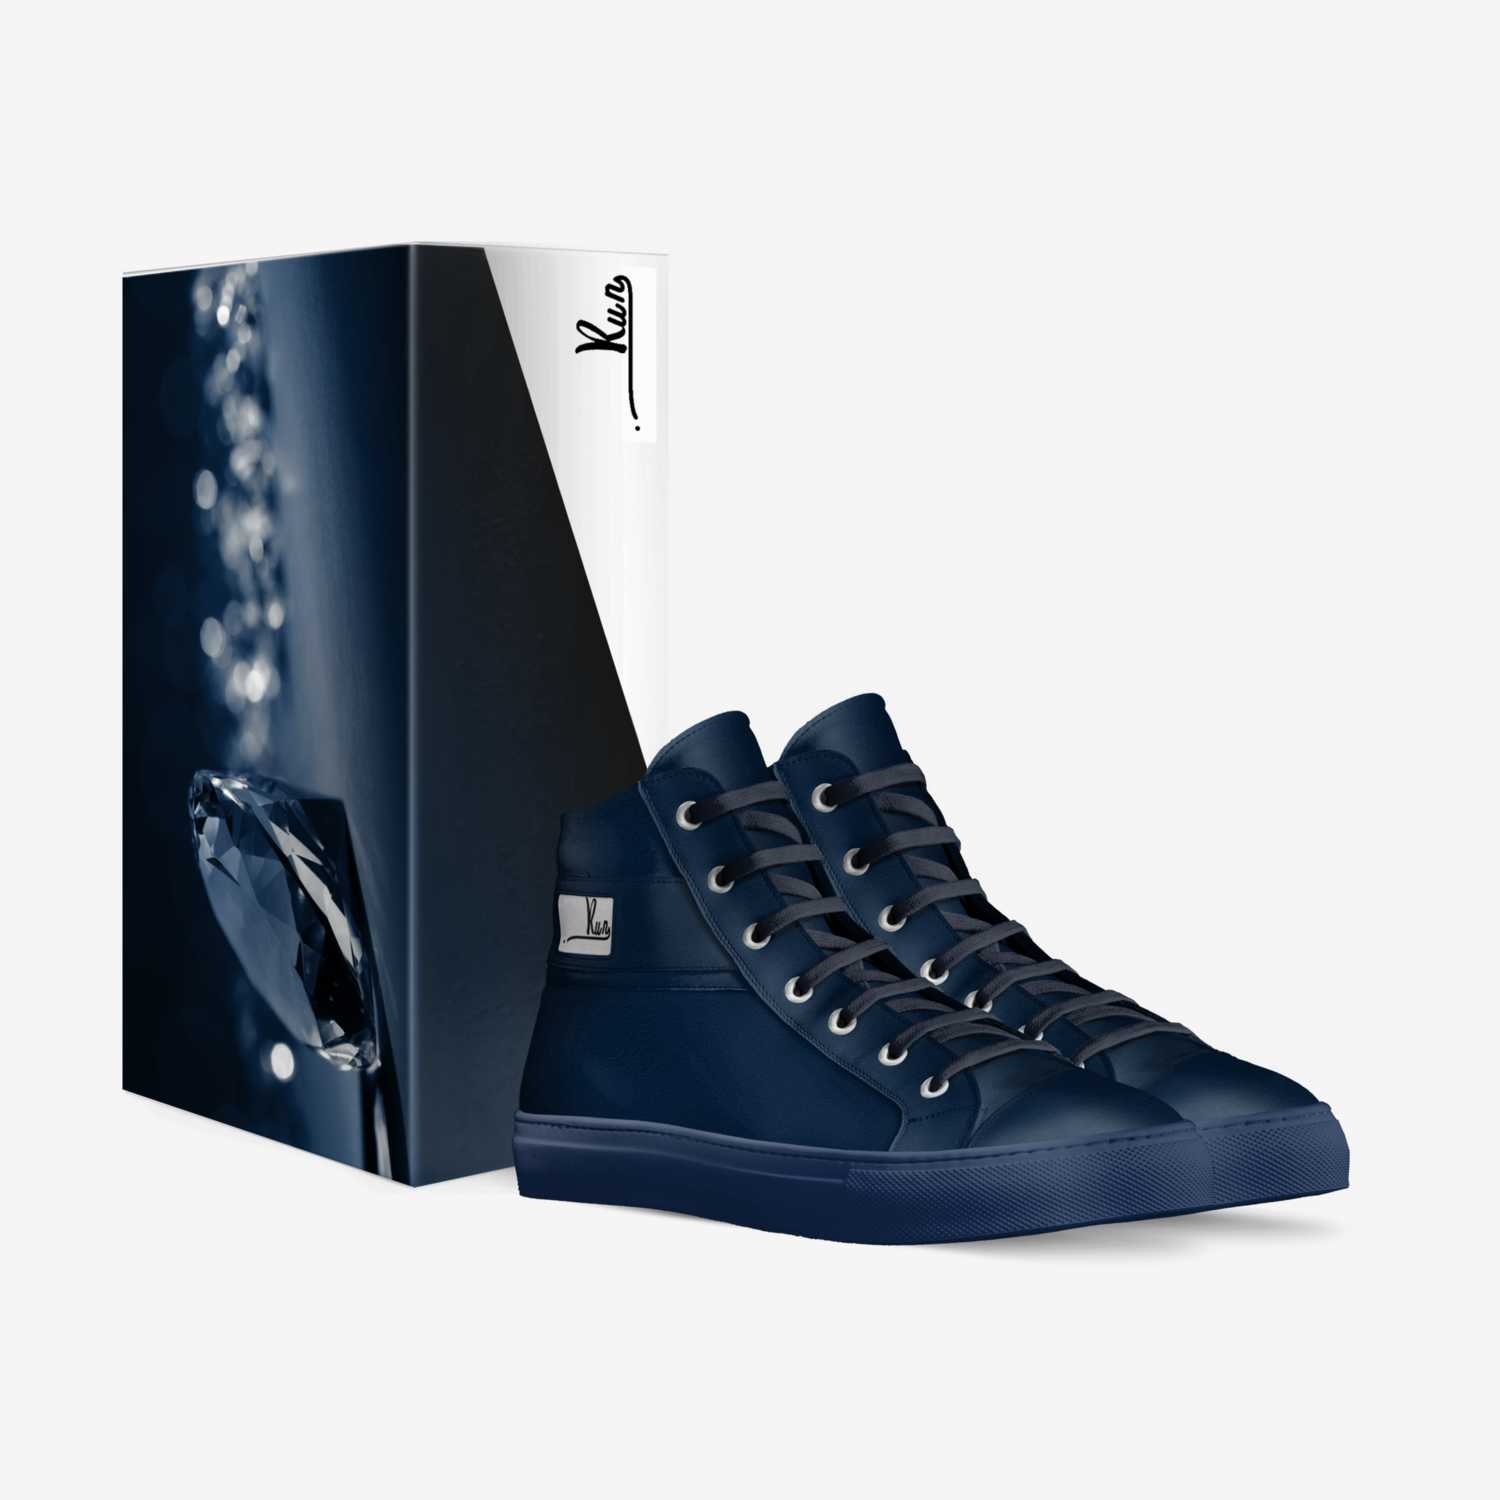 R.u.n custom made in Italy shoes by Zachery Barnes | Box view